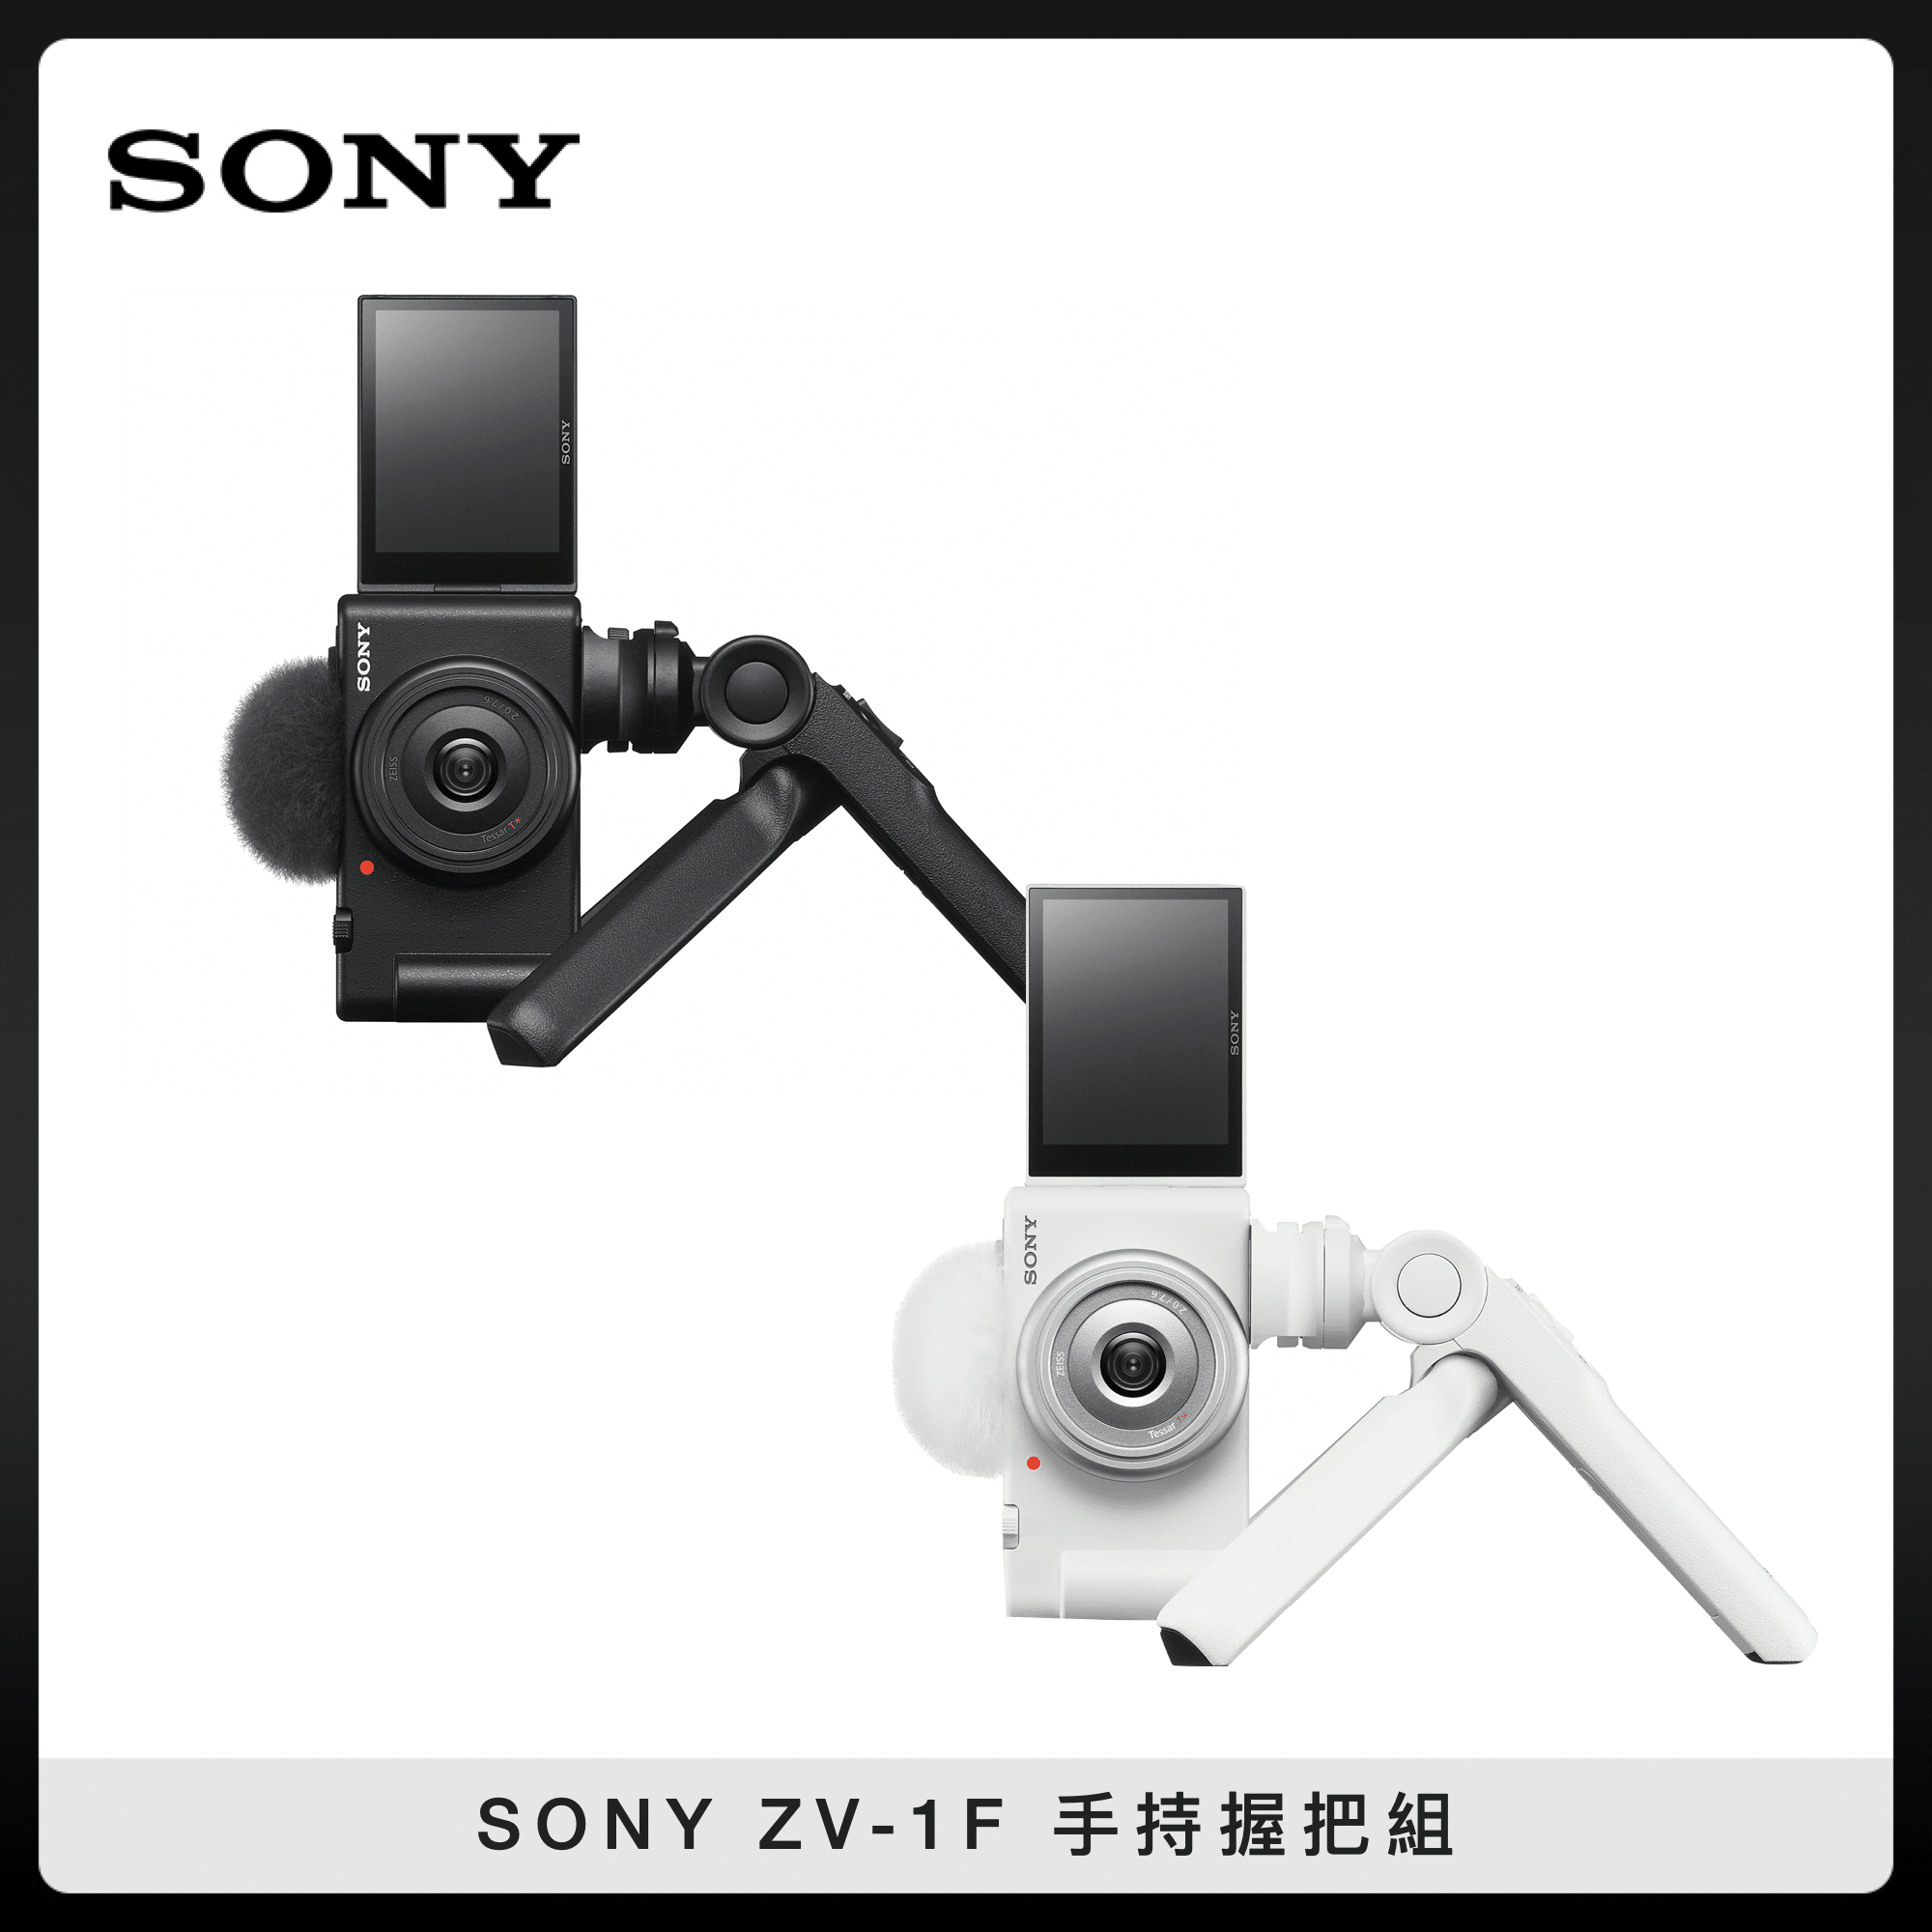 SONY ZV-1F 影音部落格相機 手持握把組-兩色選 (公司貨) ZV1F